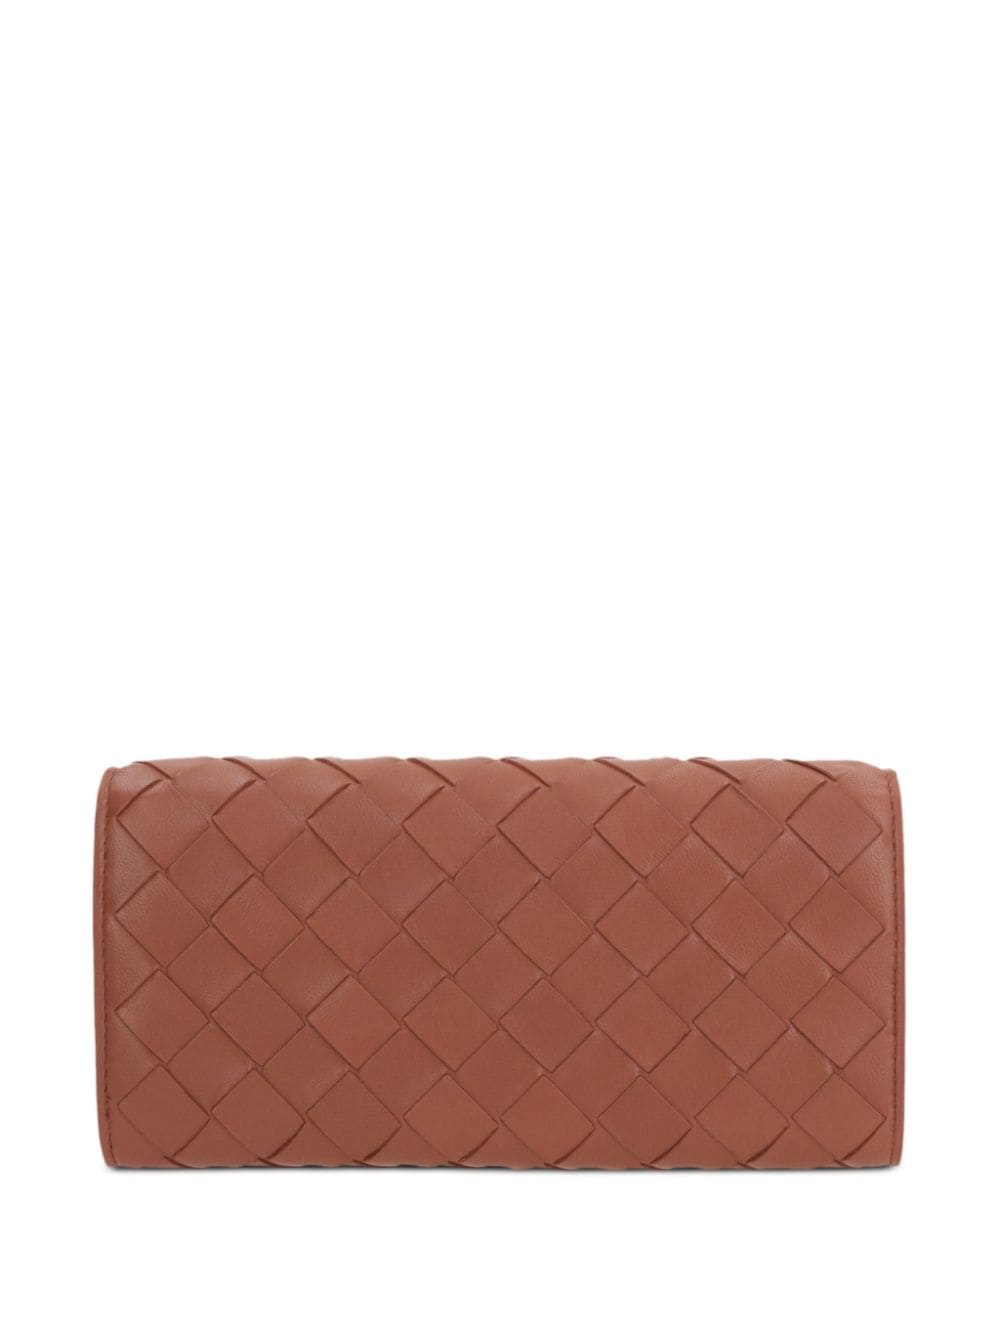 Bottega Veneta Continental Intrecciato leather wallet - Goud